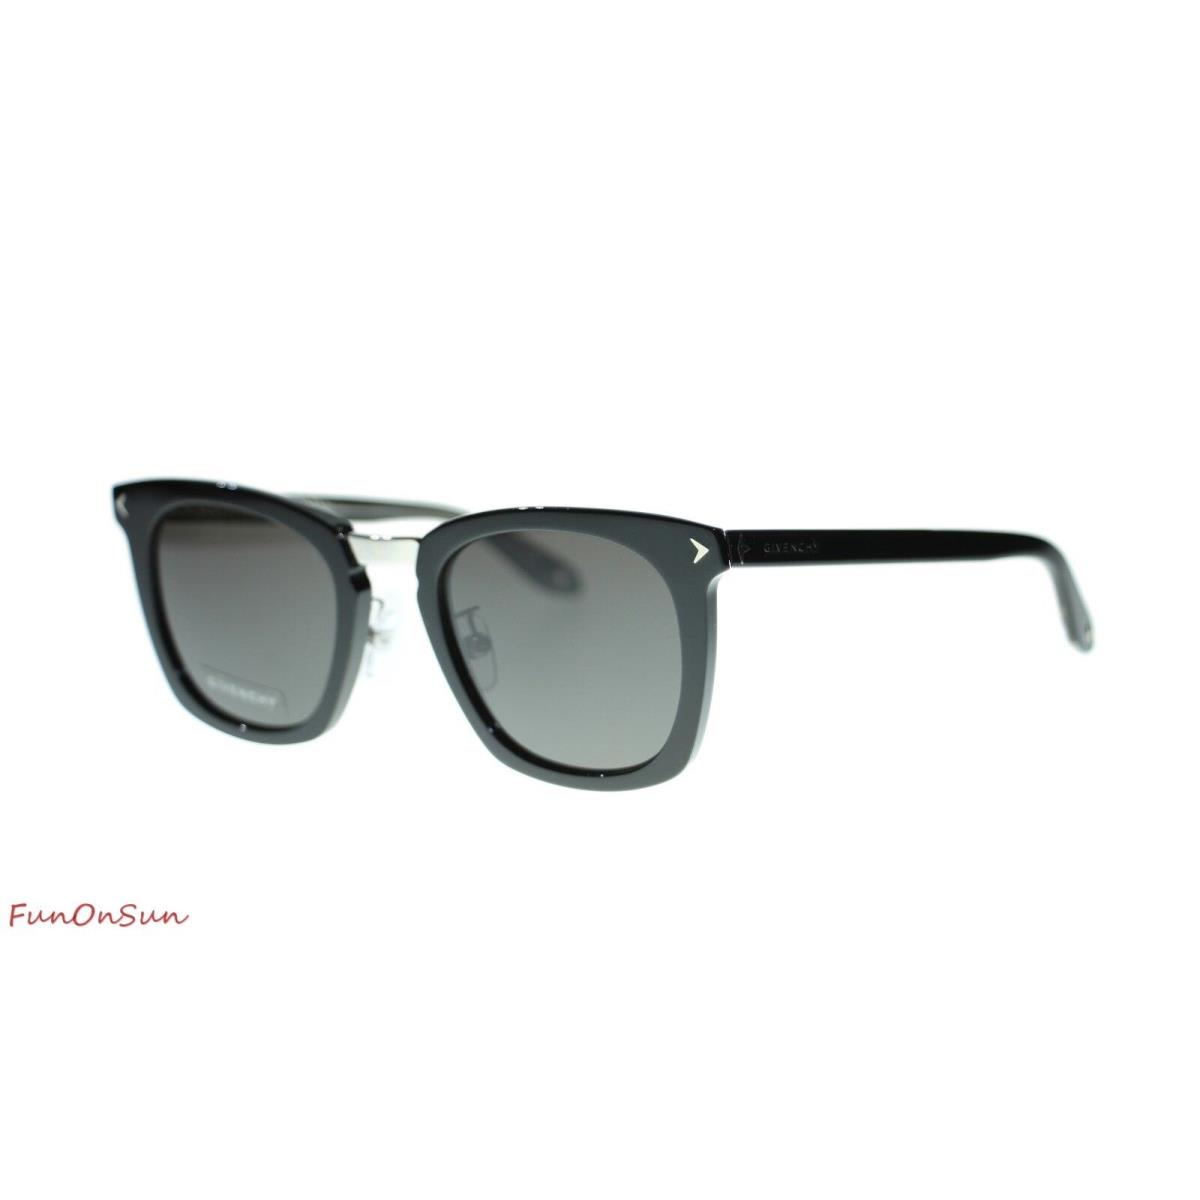 Givenchy Women`s Sunglasses GV7065 807 Black/grey Lens Square - Black Frame, Gray Lens